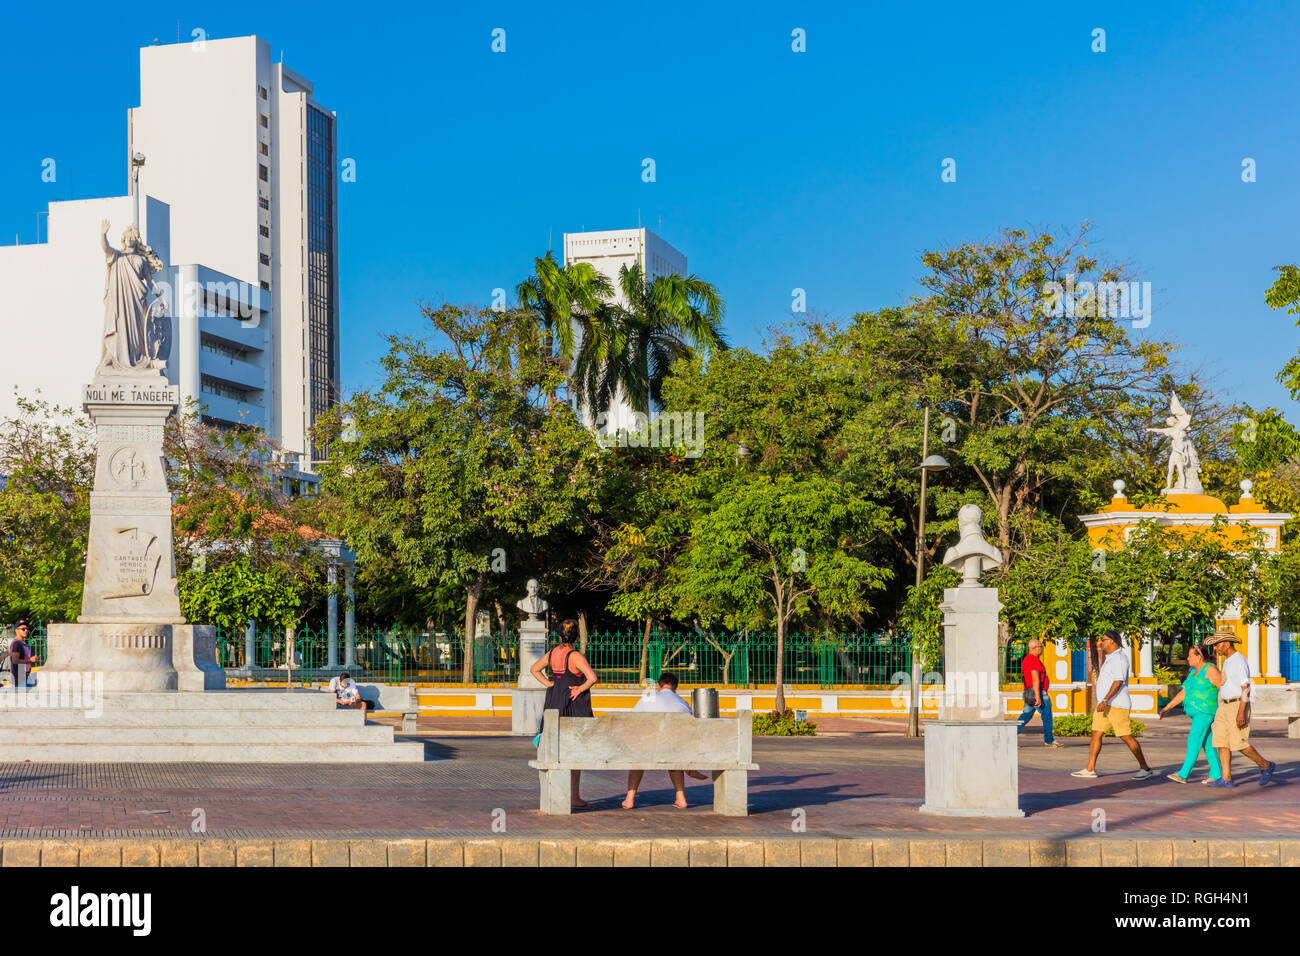 Cartagena, Kolumbien - 5. März 2017: Der Parque del centenario von Cartagena de Indias Bolivar in Kolumbien Südamerika Stockfoto